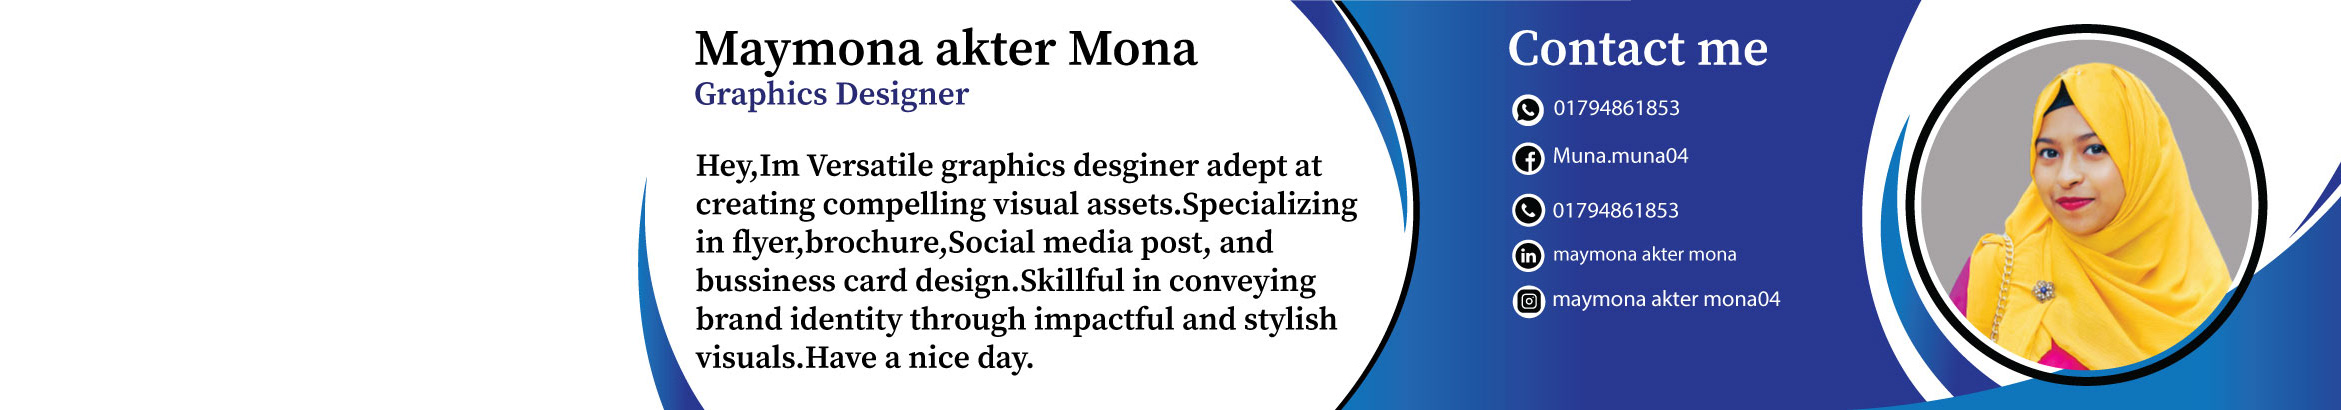 Maymona Akter Monas profilbanner